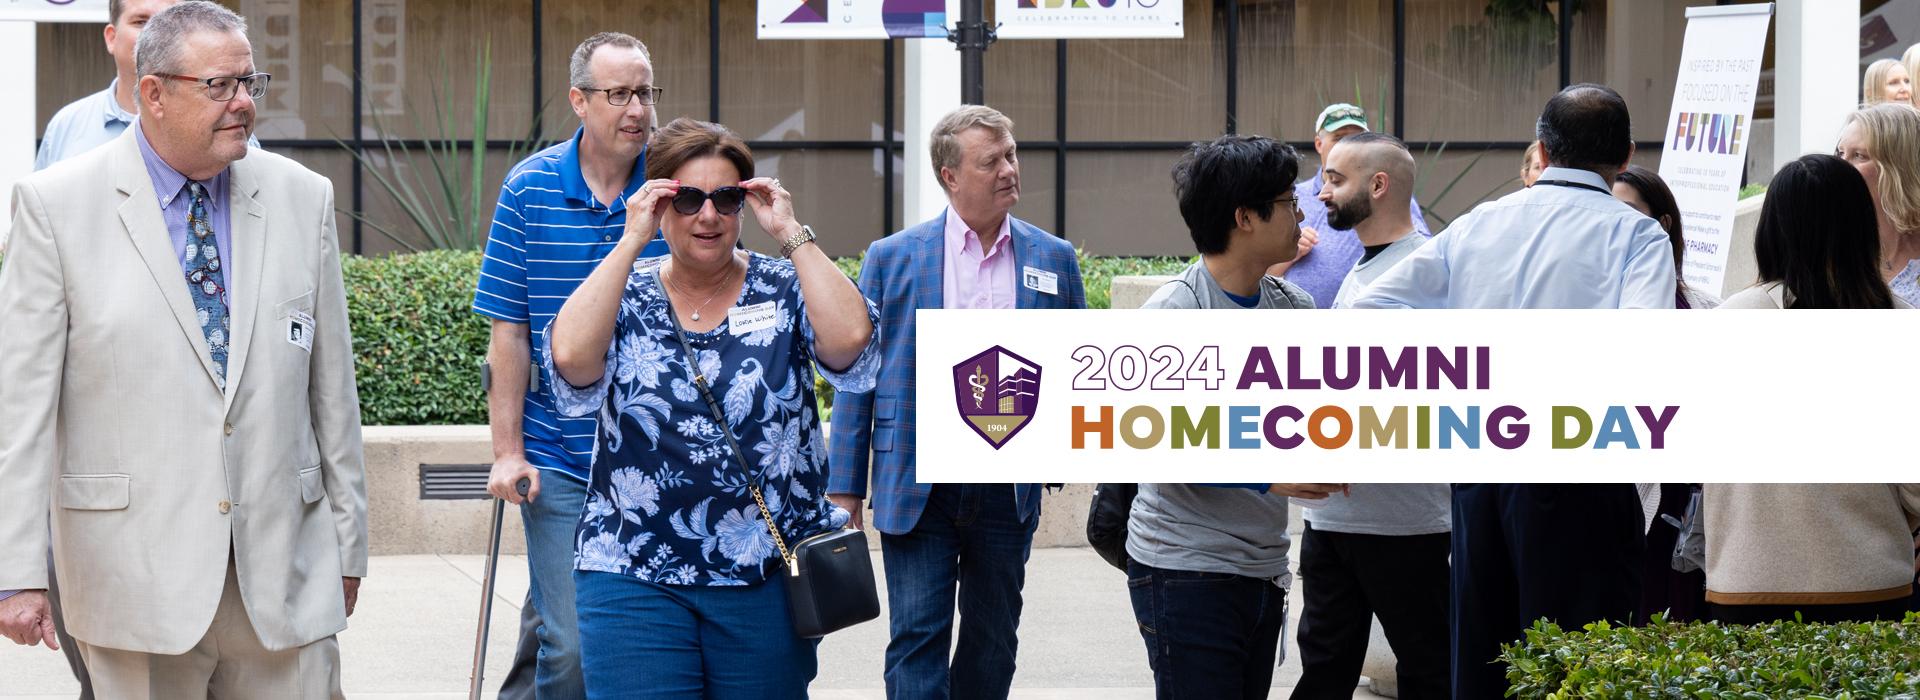 2024 Alumni Homecoming Day